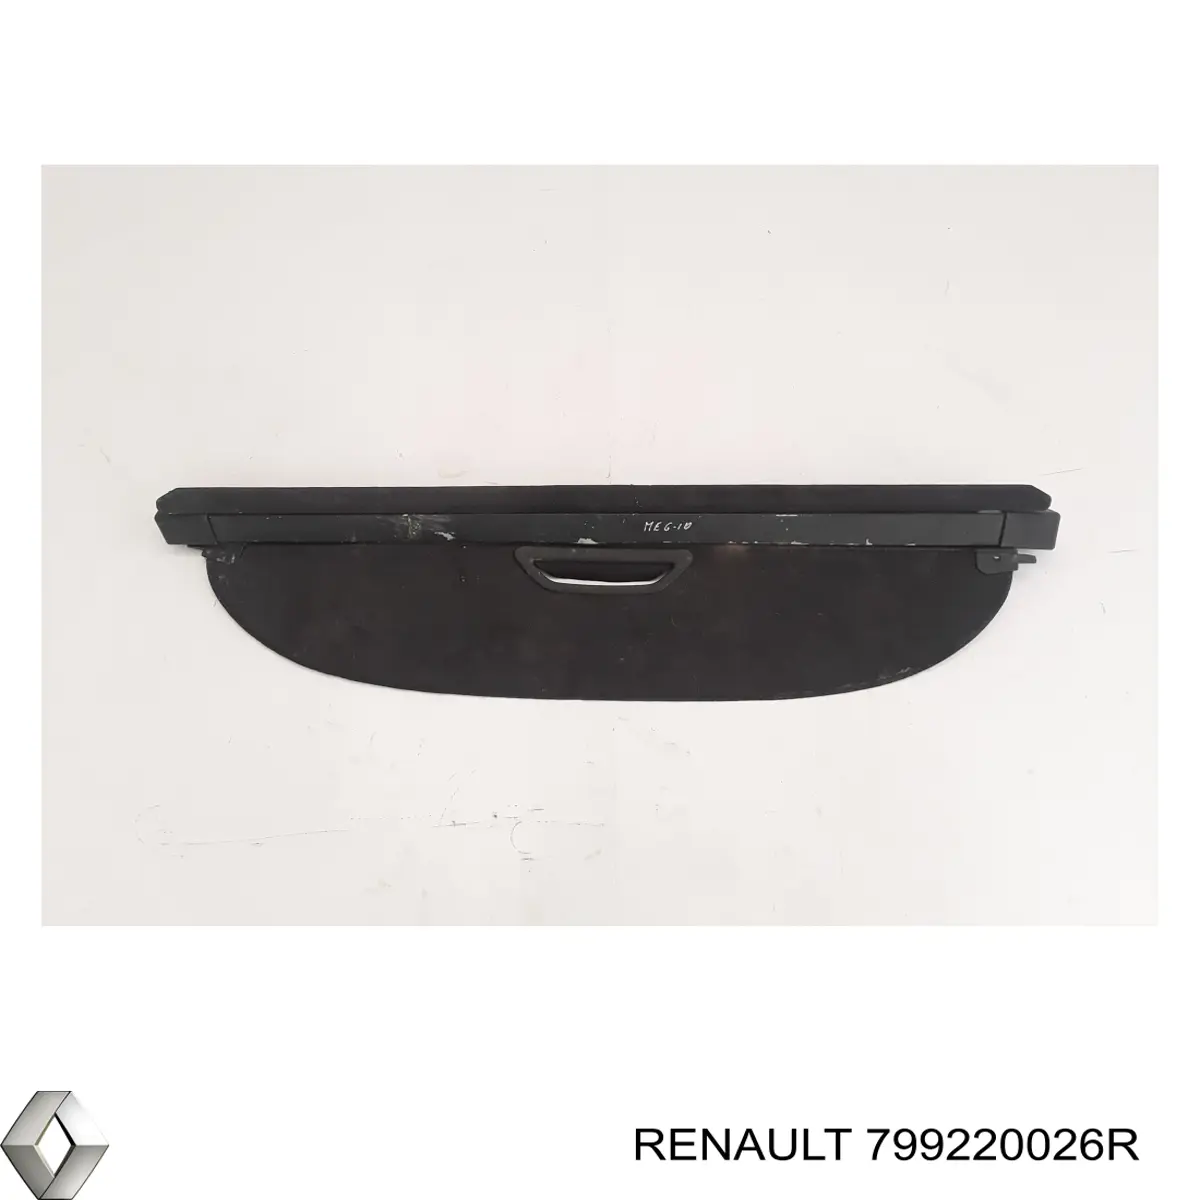 799220026R Renault (RVI) cortina del compartimento de carga